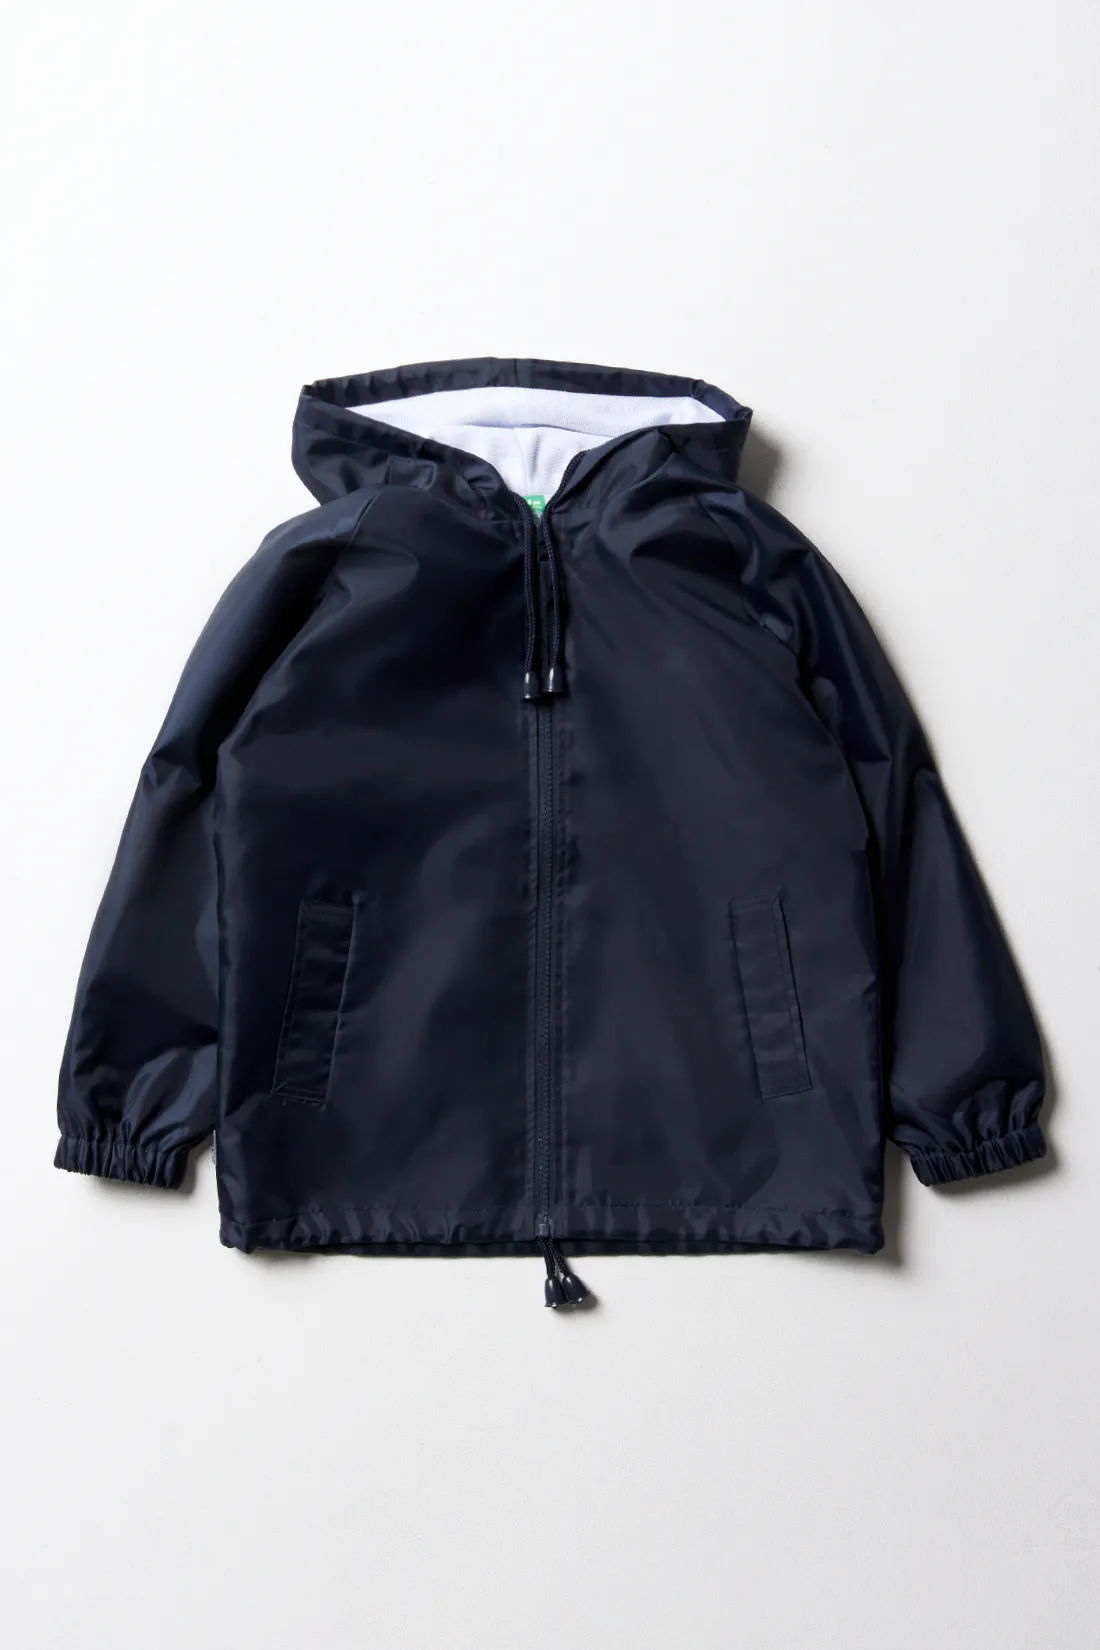 Unisex rain jacket navy - Kids's School Clothes | Ackermans